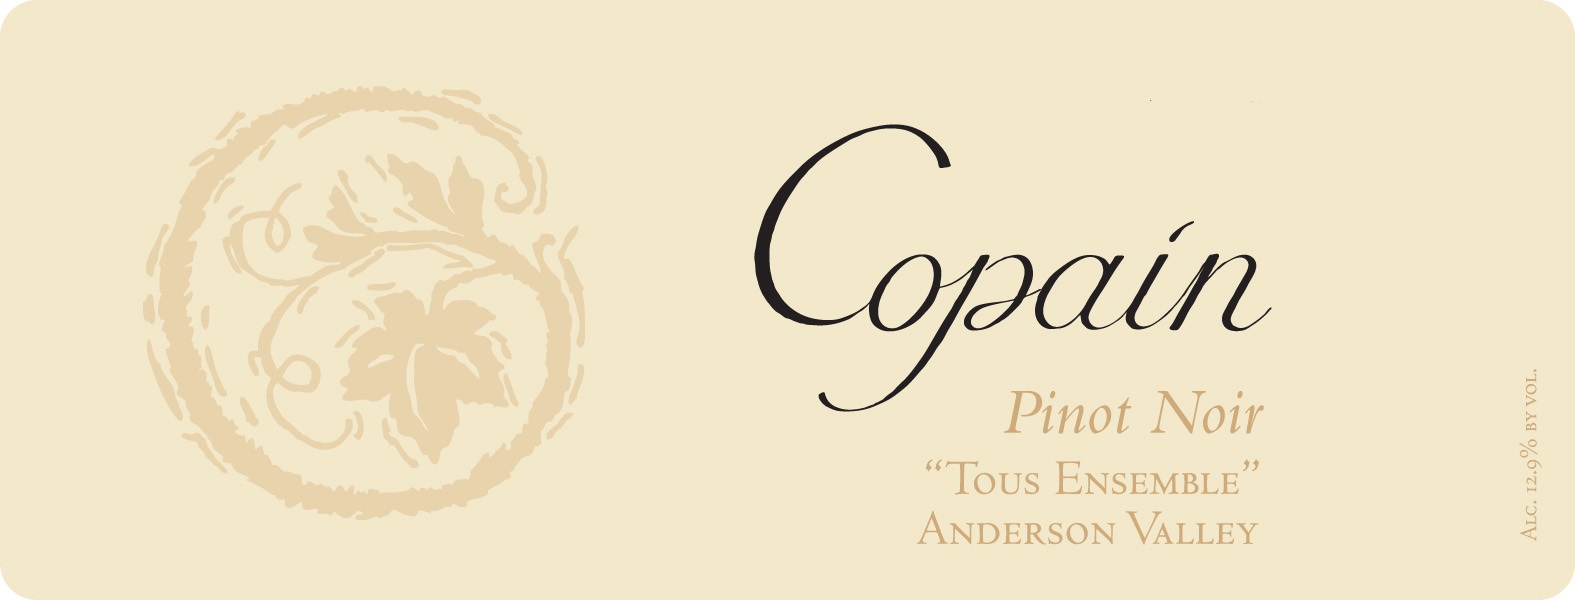 2012 Copain Pinot Noir Kiser En Haut Anderson Valley - click image for full description